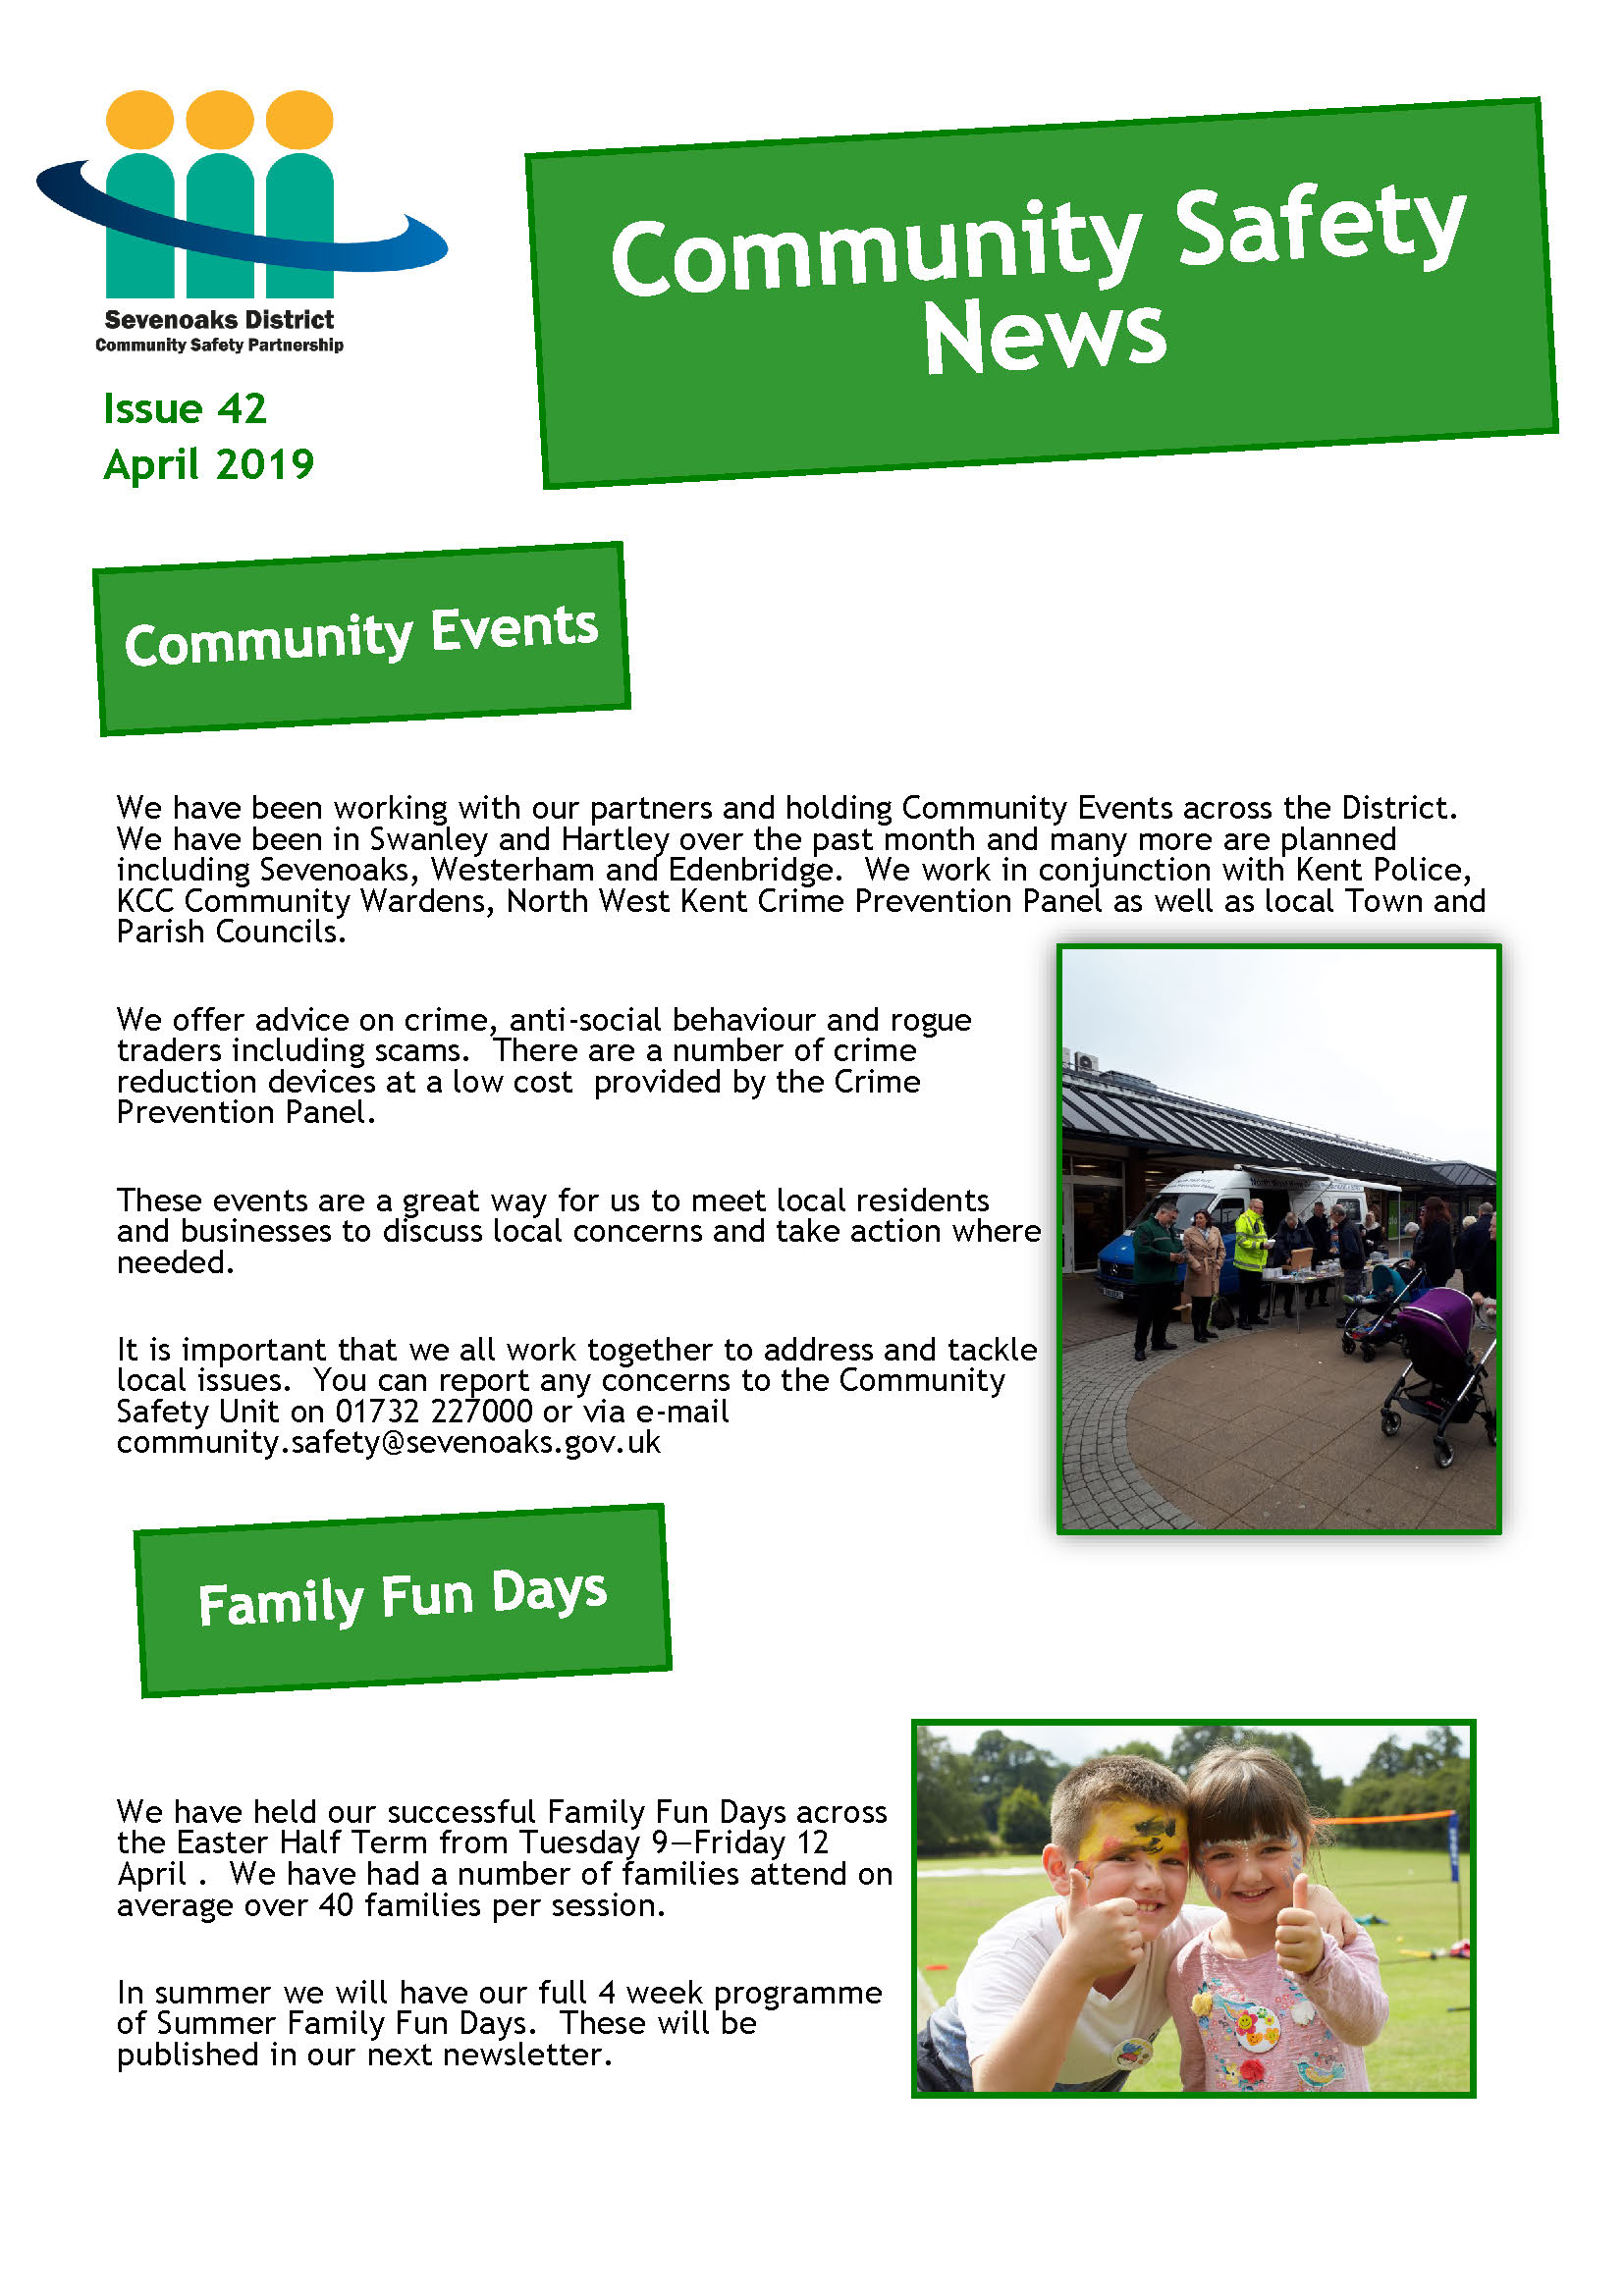 Dunton Green Parish Council Community Safety Unit - News & Advice